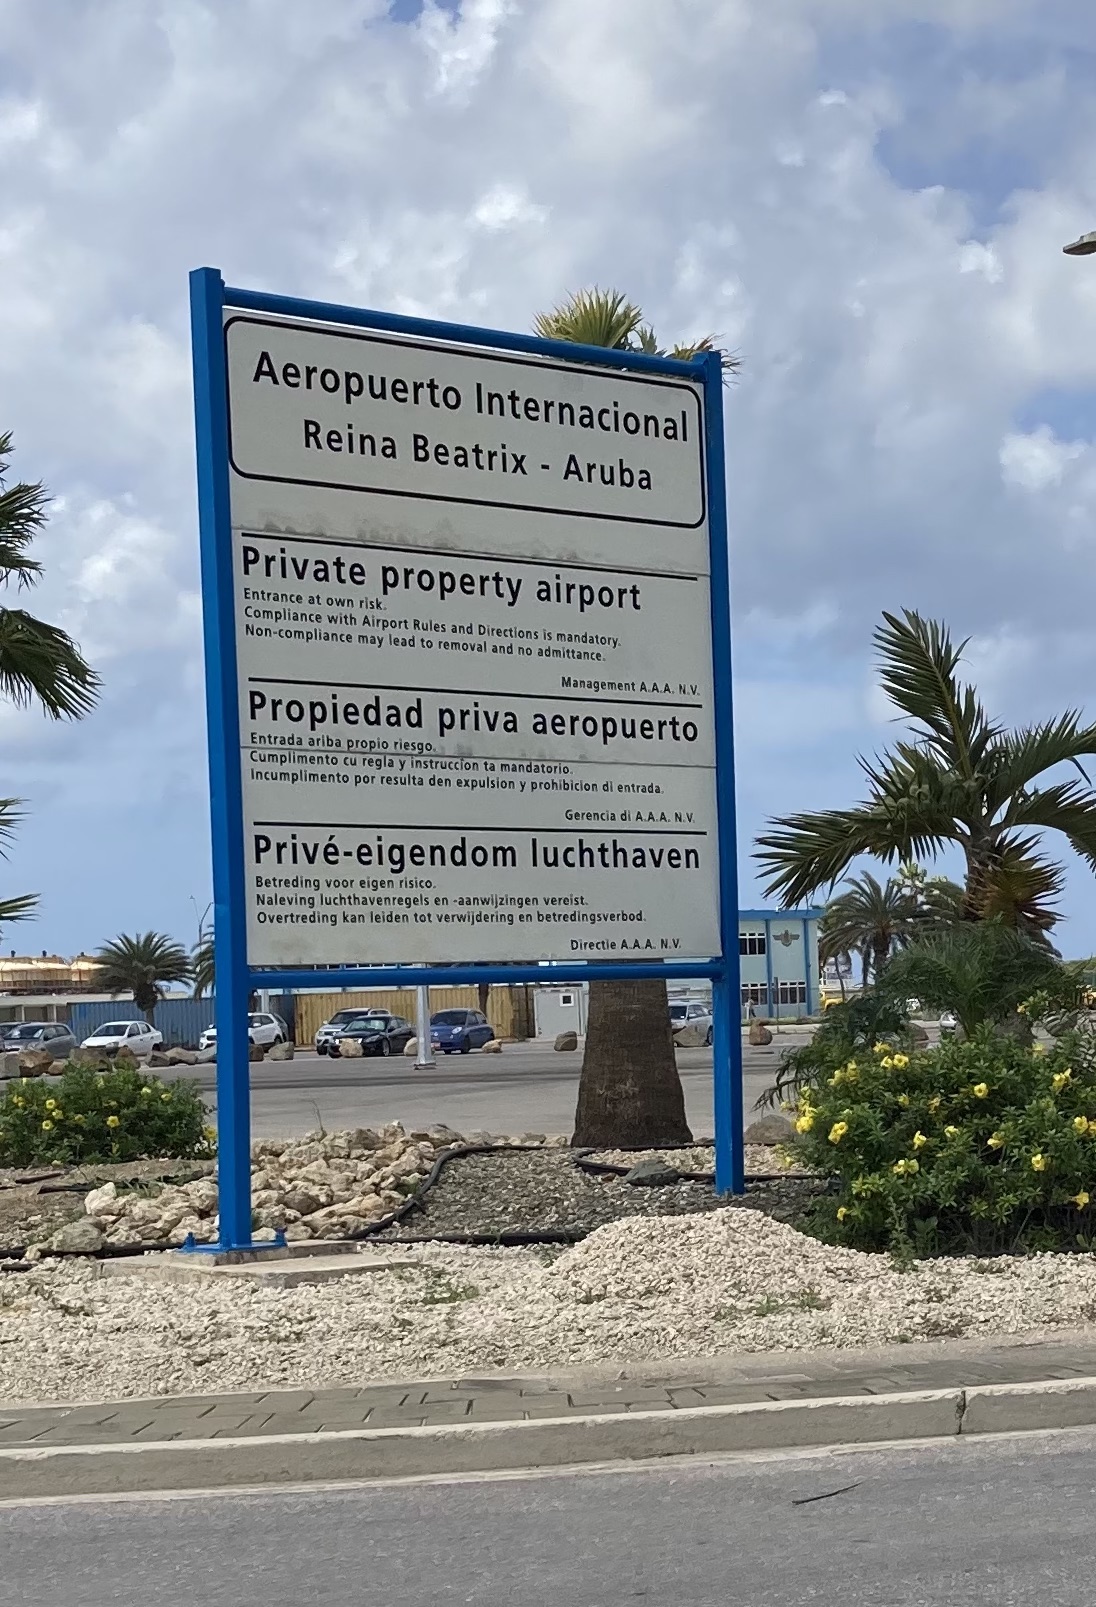 Airport Beatrix - Aruba